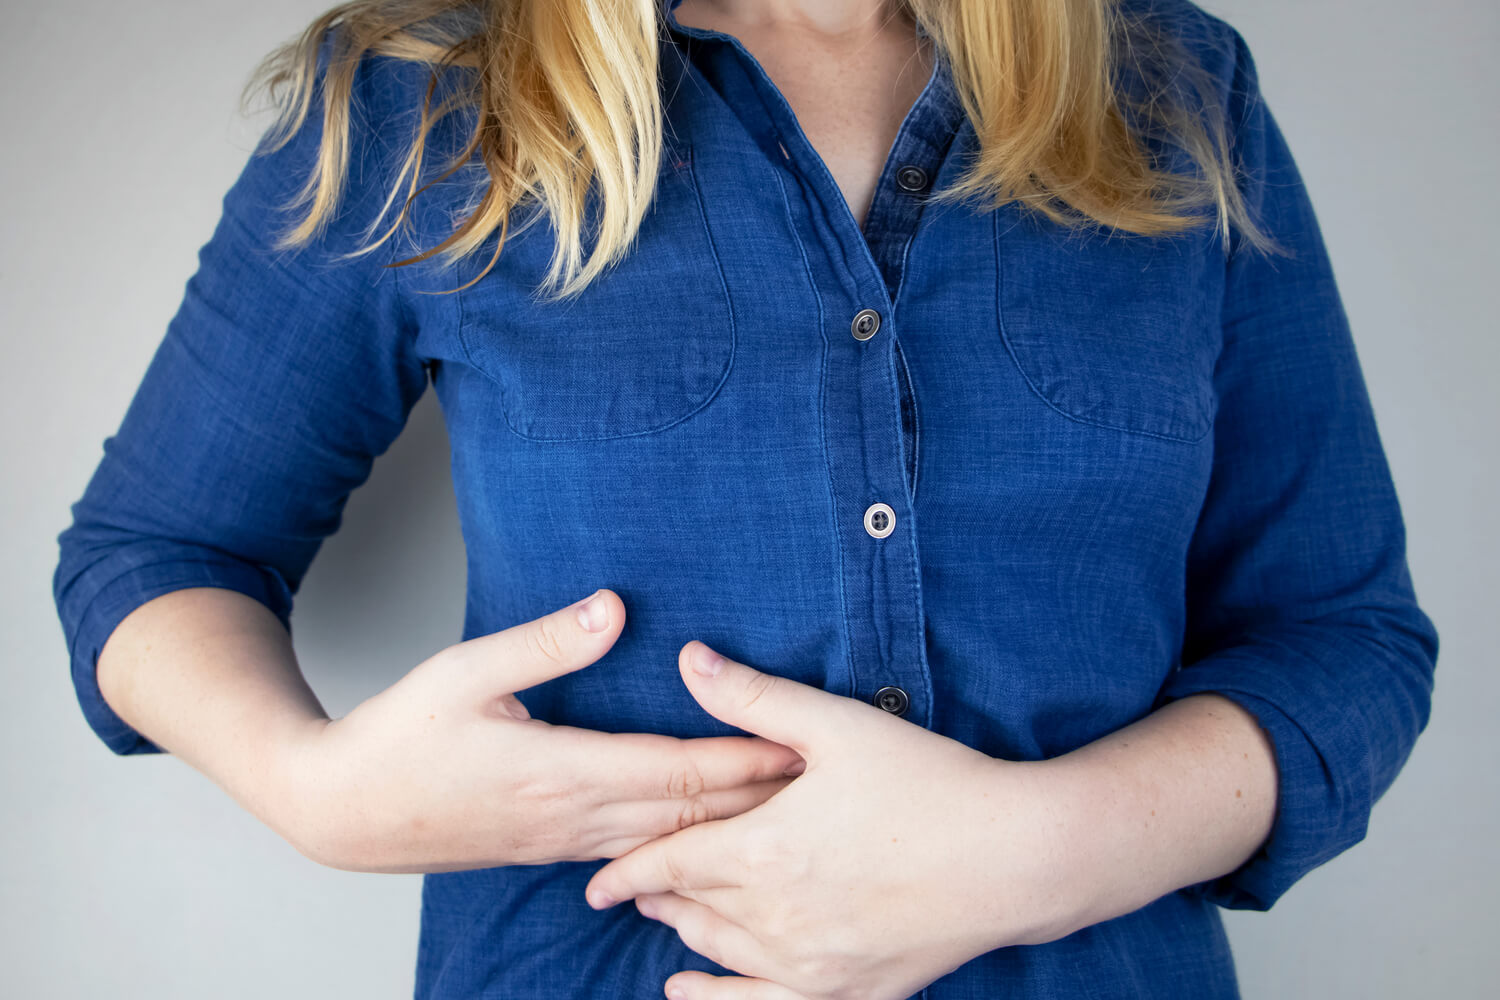 rib pain during pregnancy